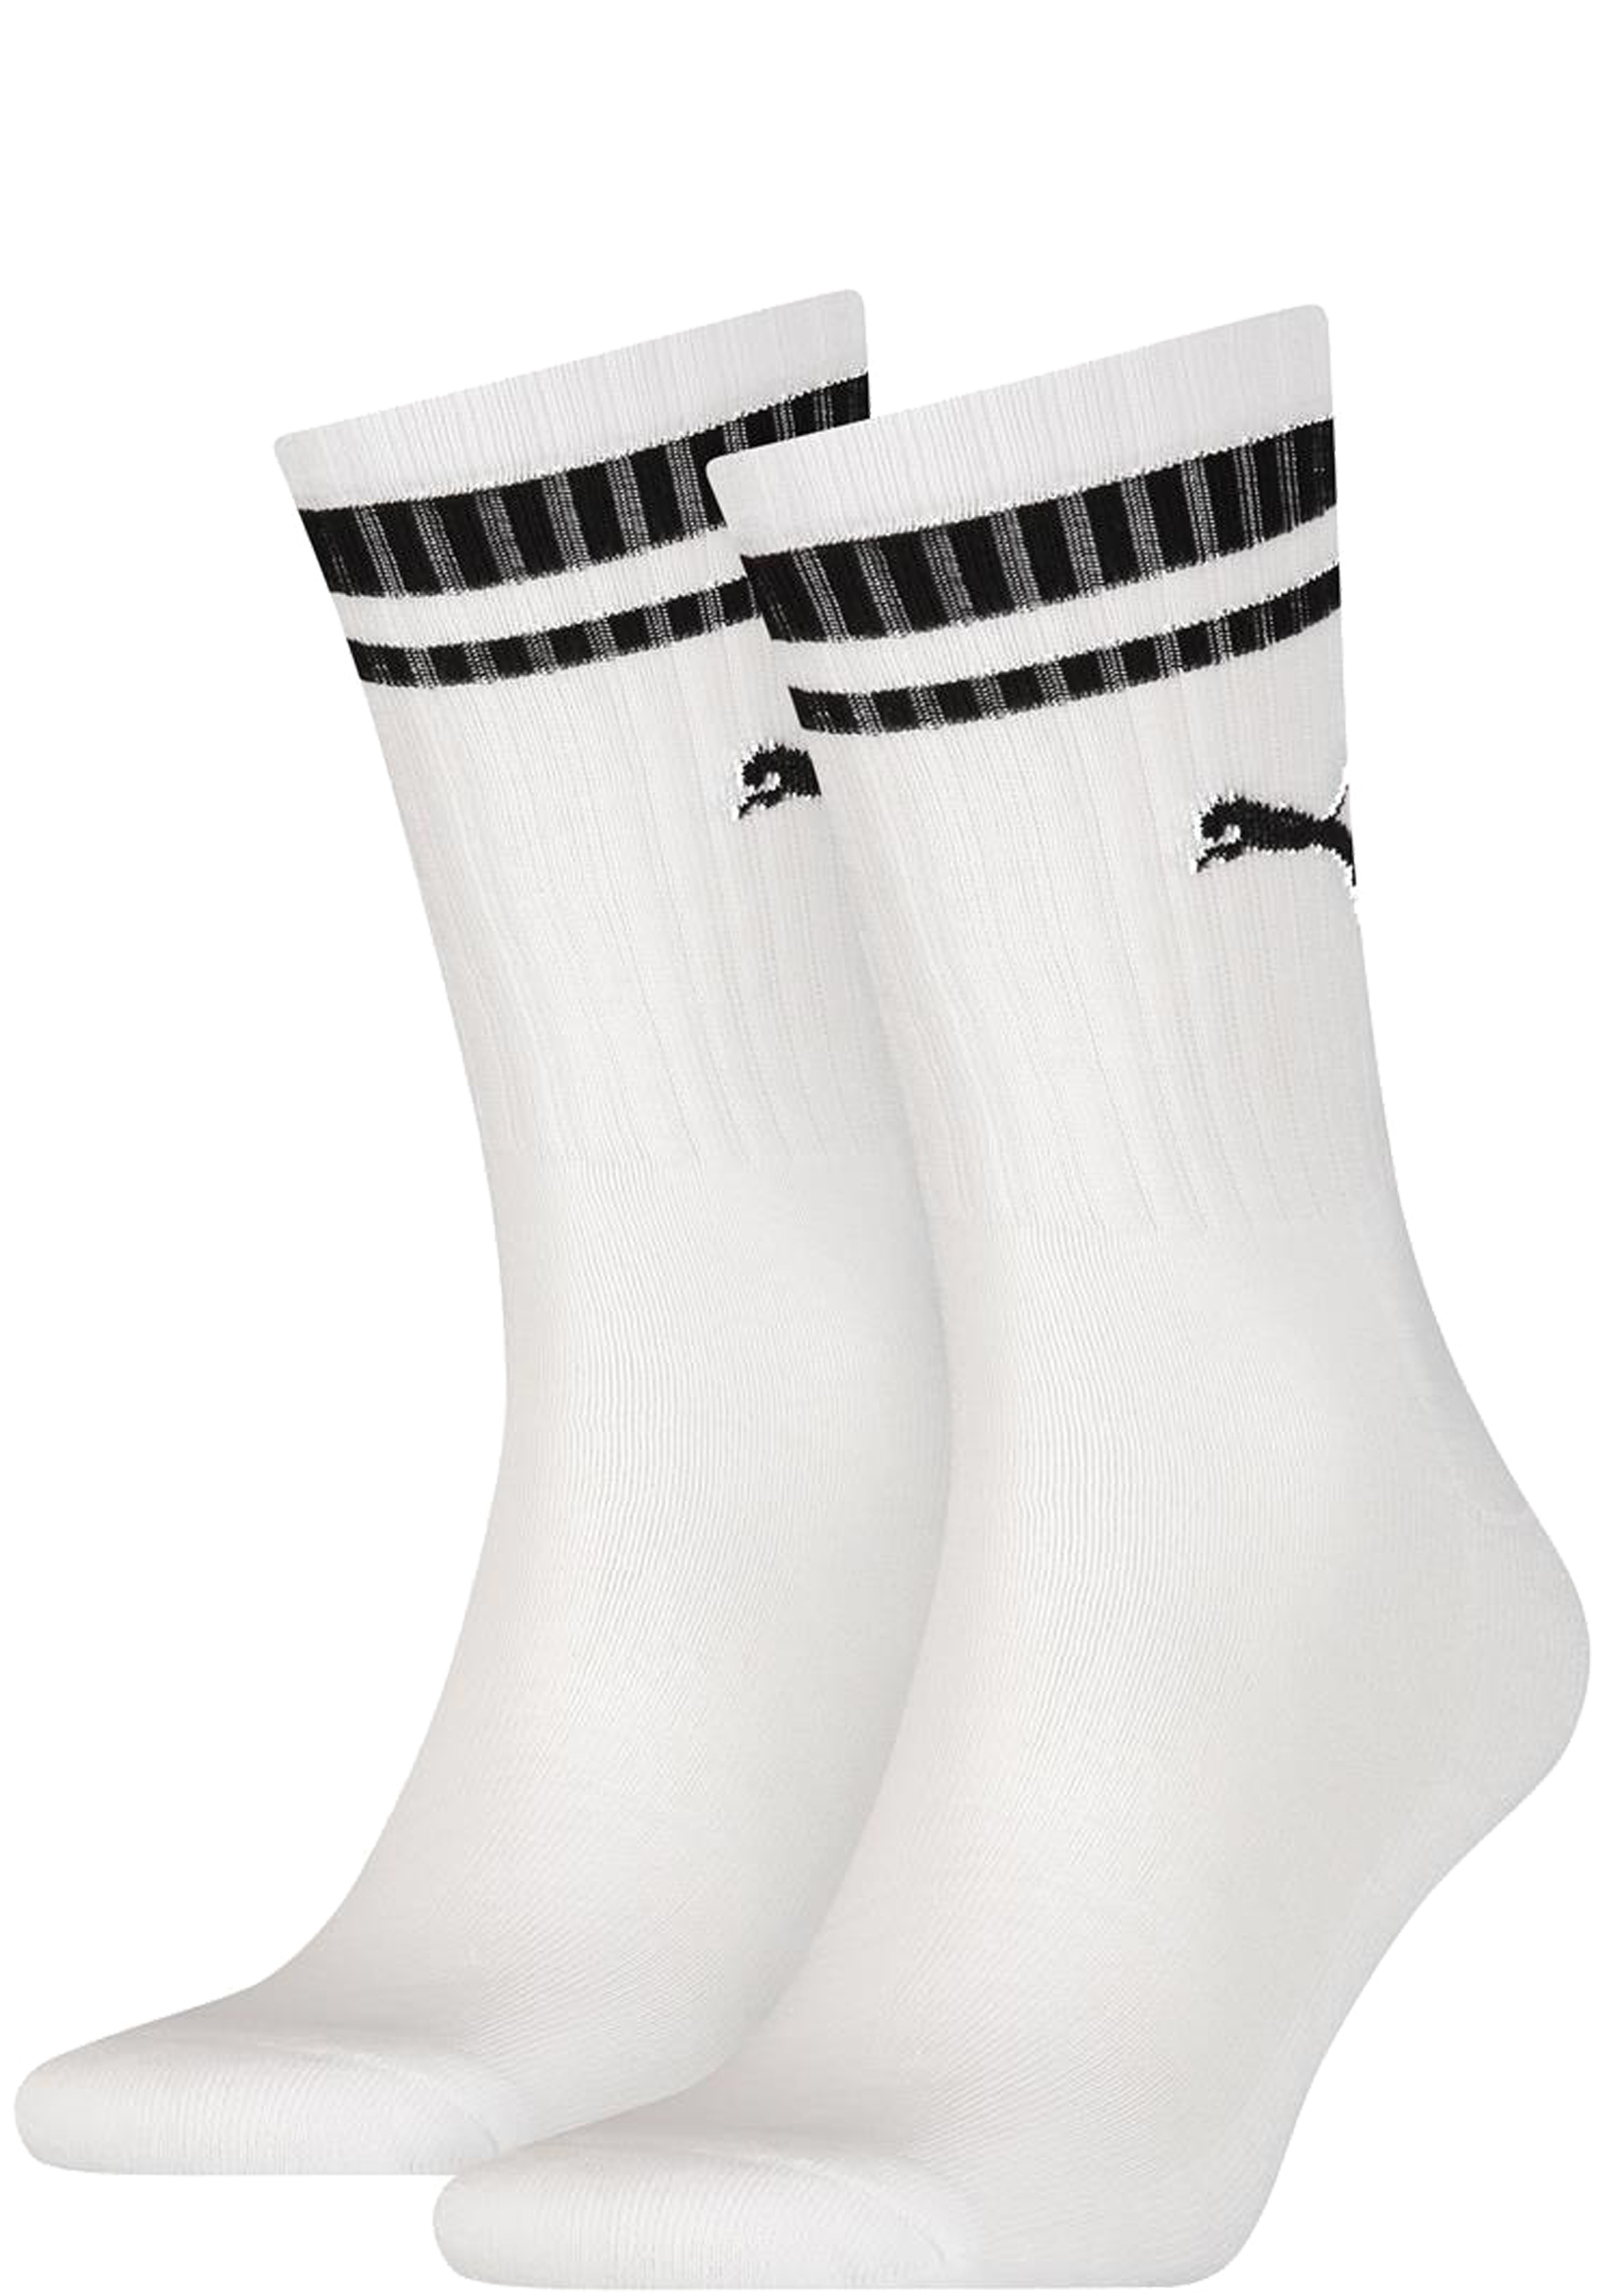 Puma Crew Heritage Stripe Unisex (2-pack), unisex sokken, wit gestreept